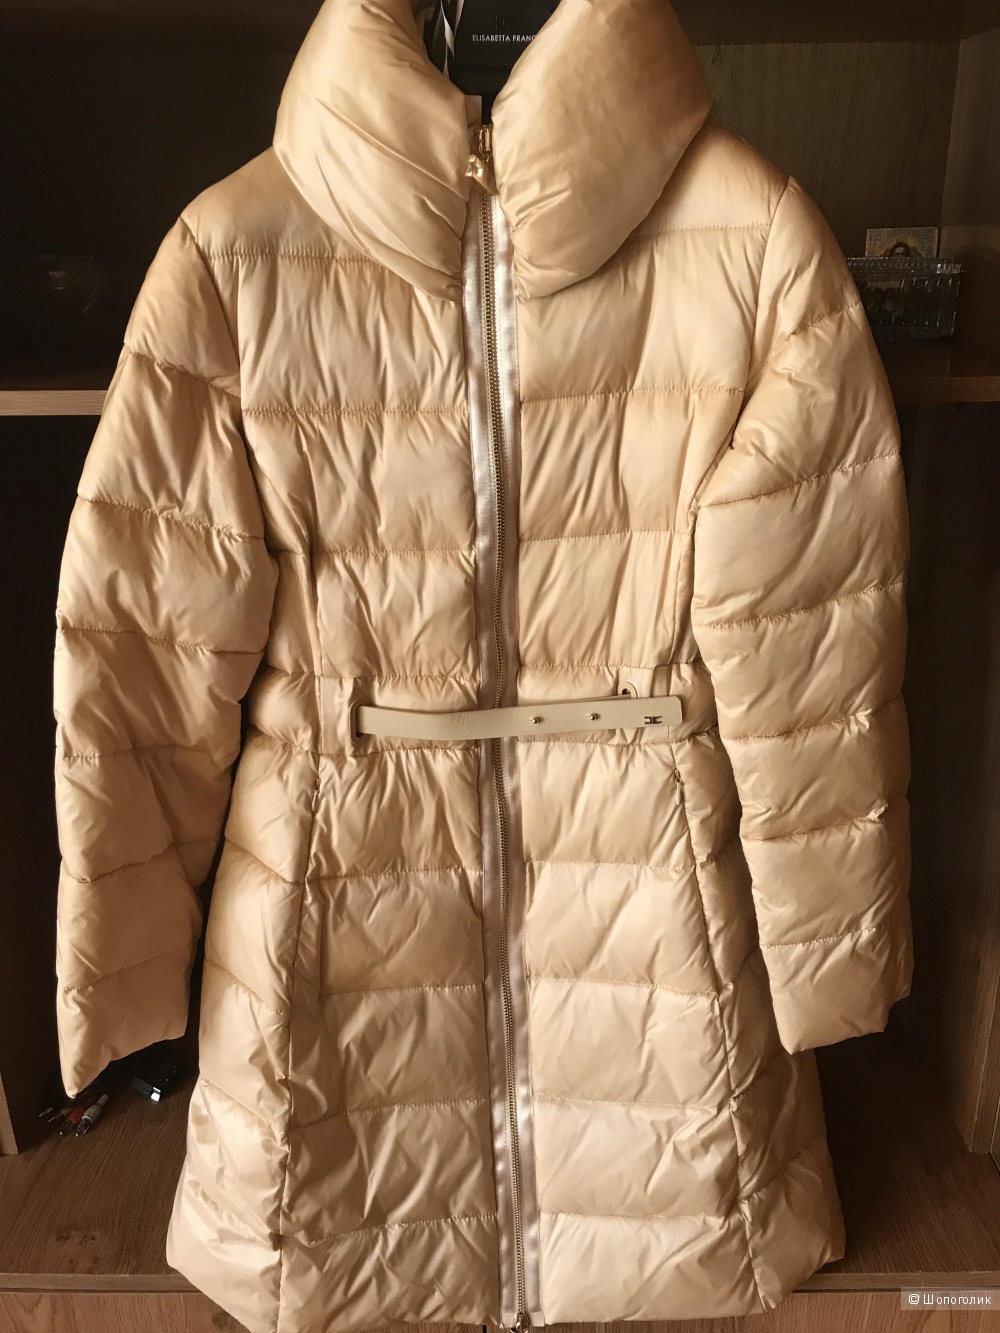 Пальто Elisabetta Franchi размер 38 или XS